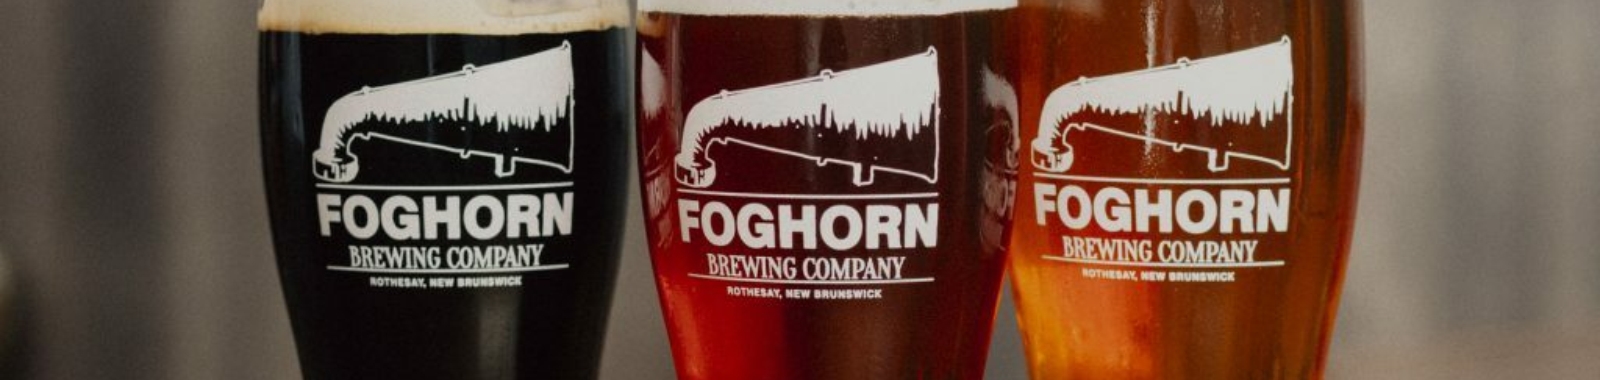 Foghorn header